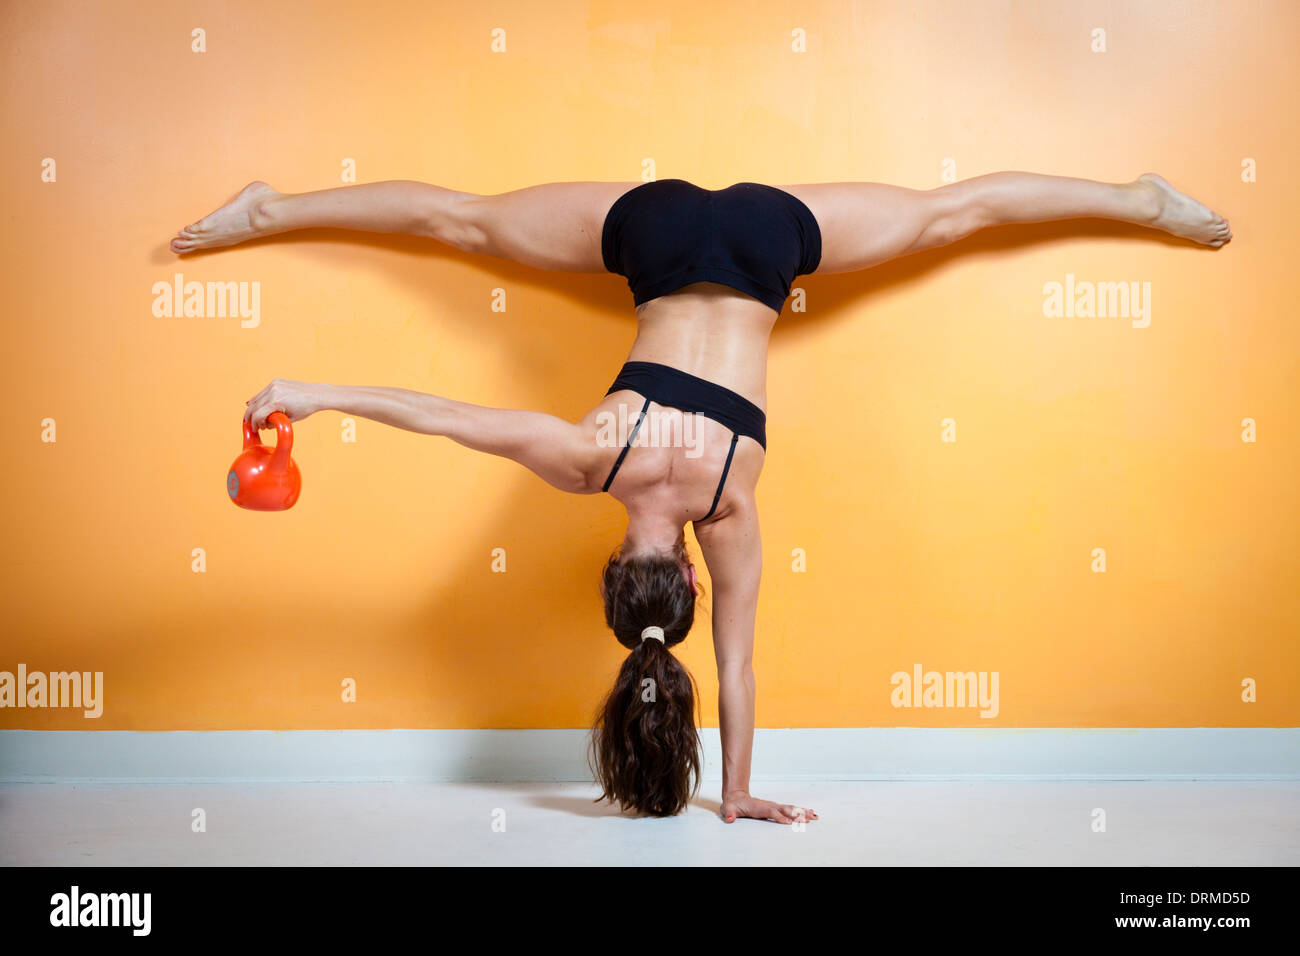 Gymnast performing exercises Stock Photo